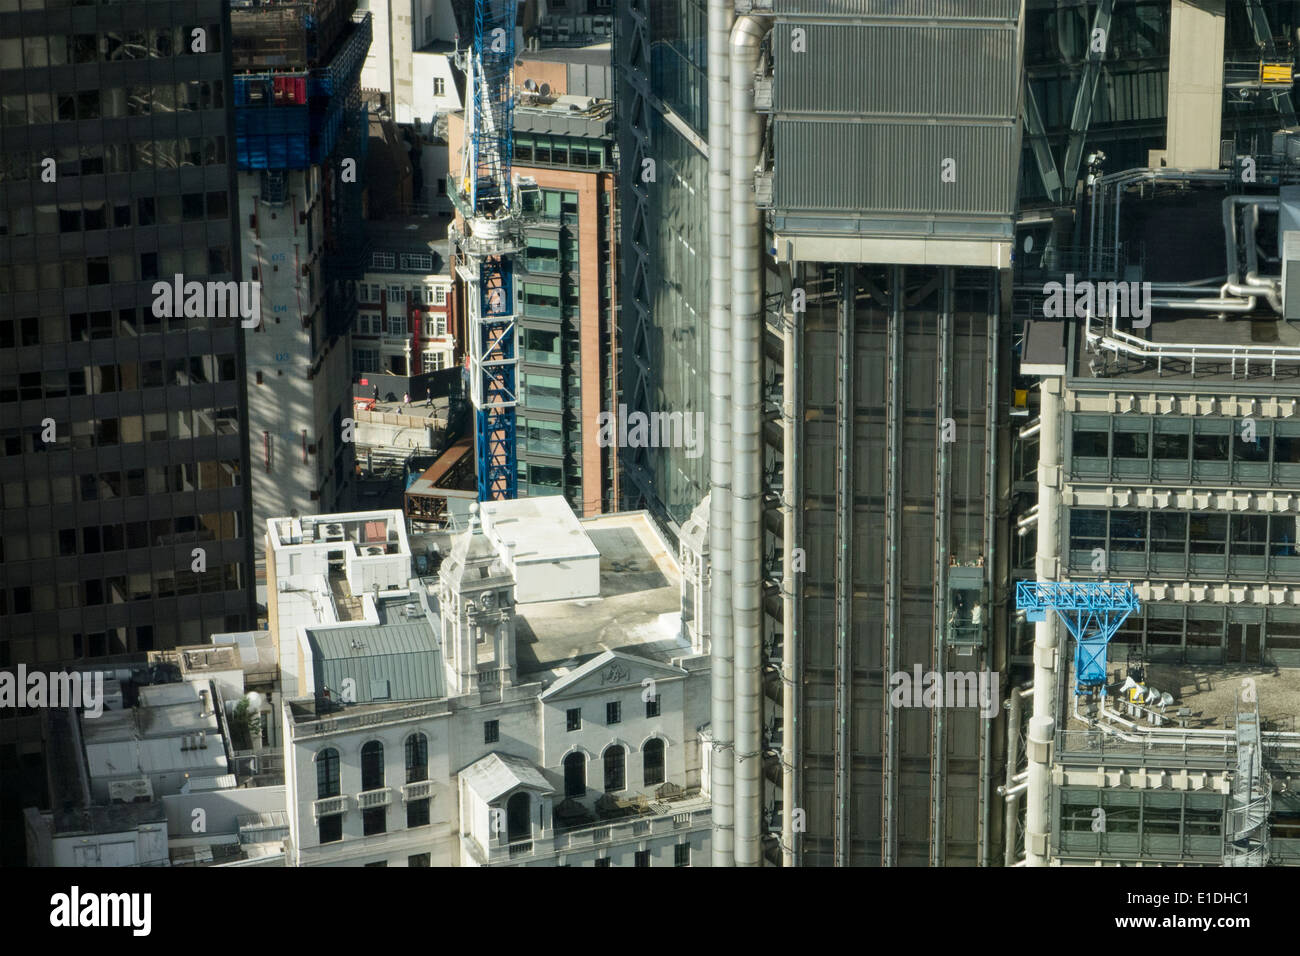 Loyds bank  in the City Of London, London, UK  Photo: pixstory / Alamy Stock Photo